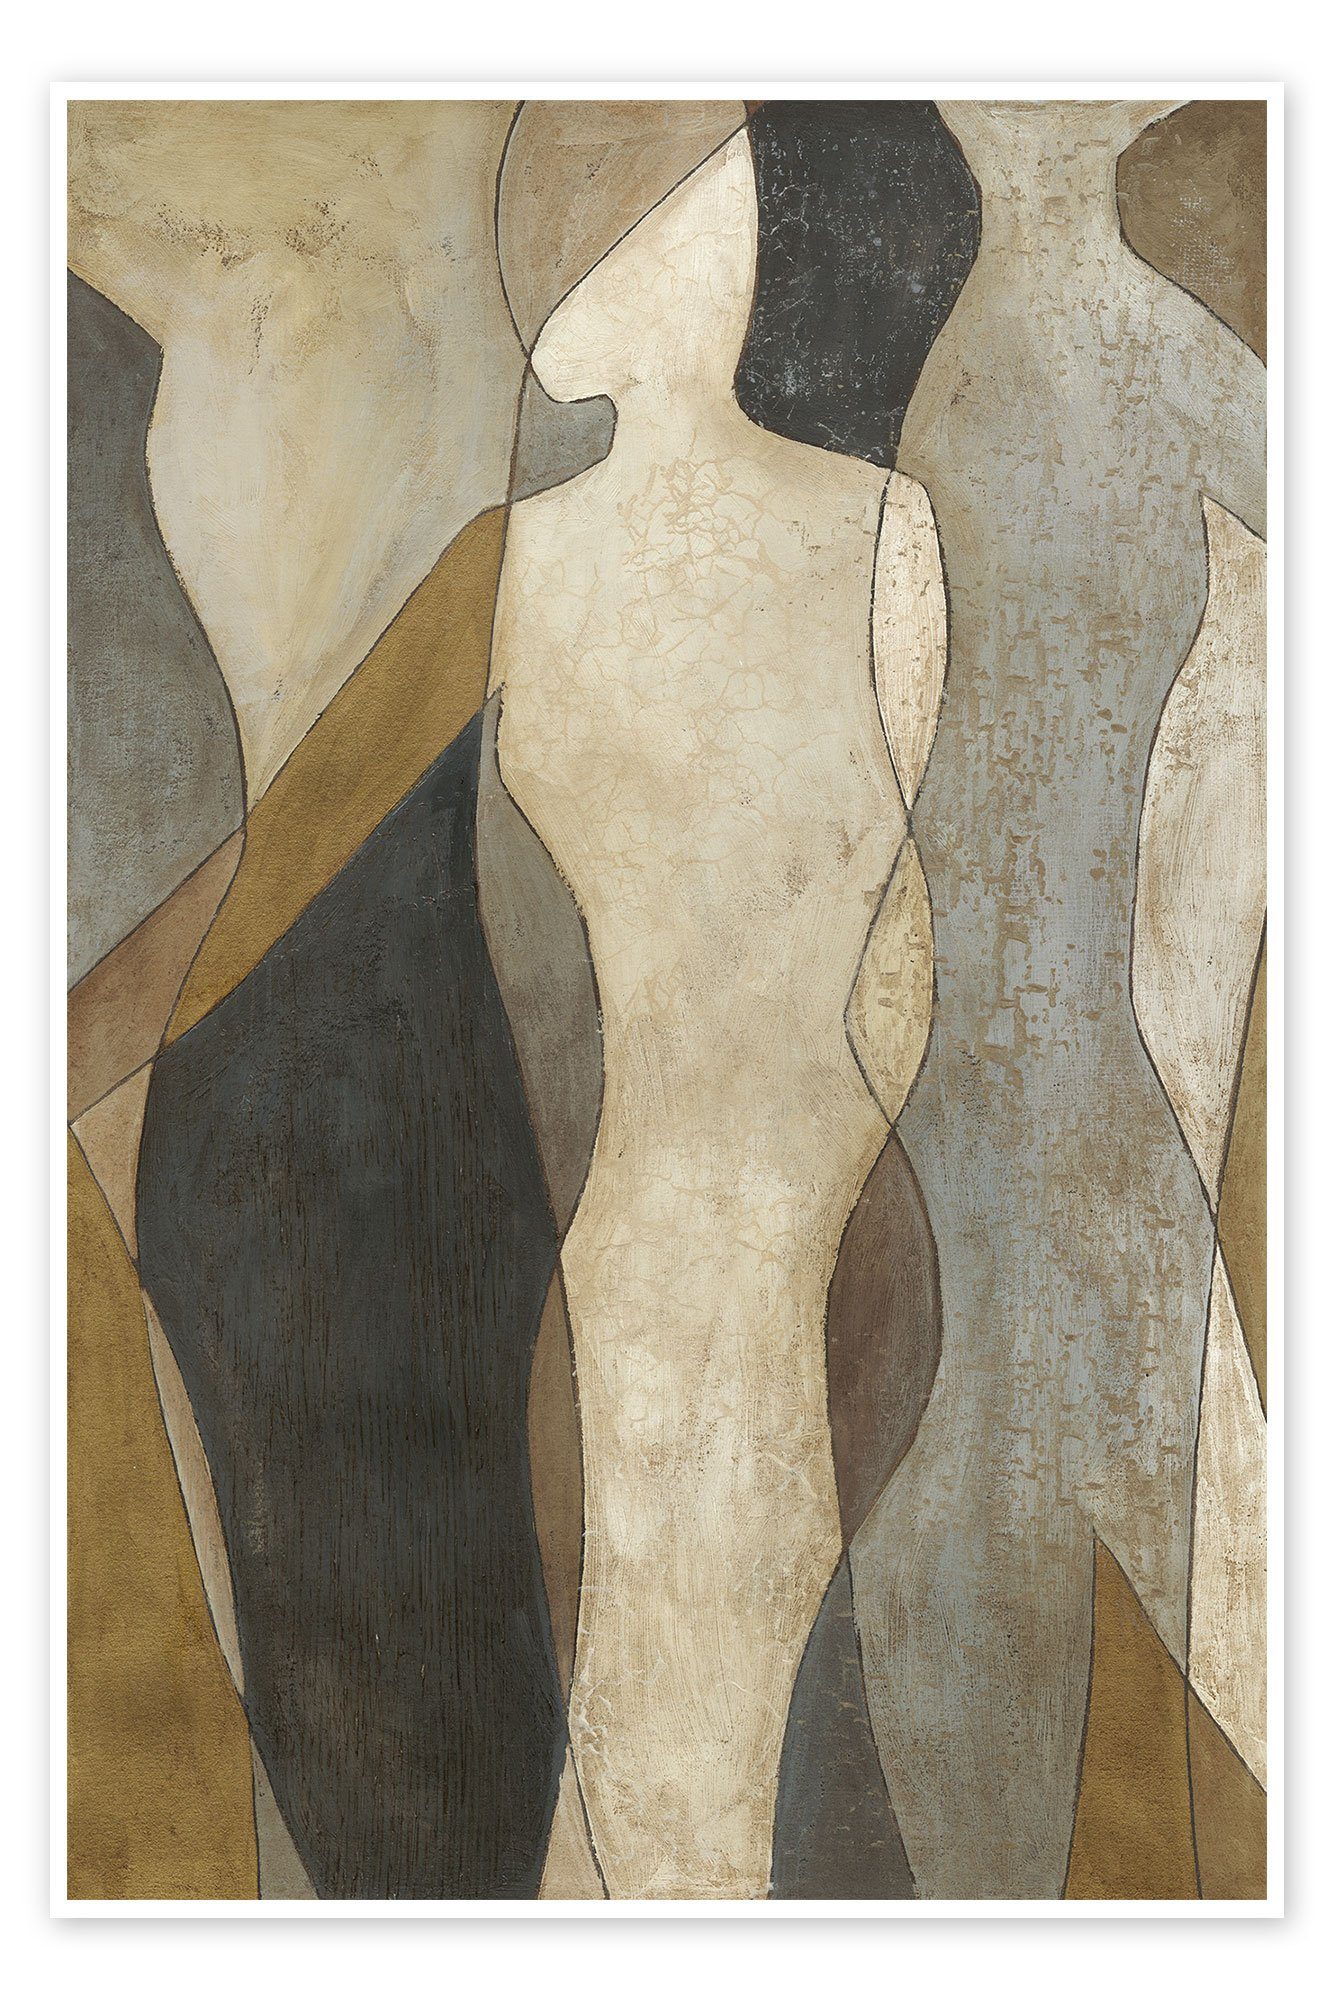 Posterlounge Poster Megan Meagher, Figuren I, Esszimmer Rustikal Malerei